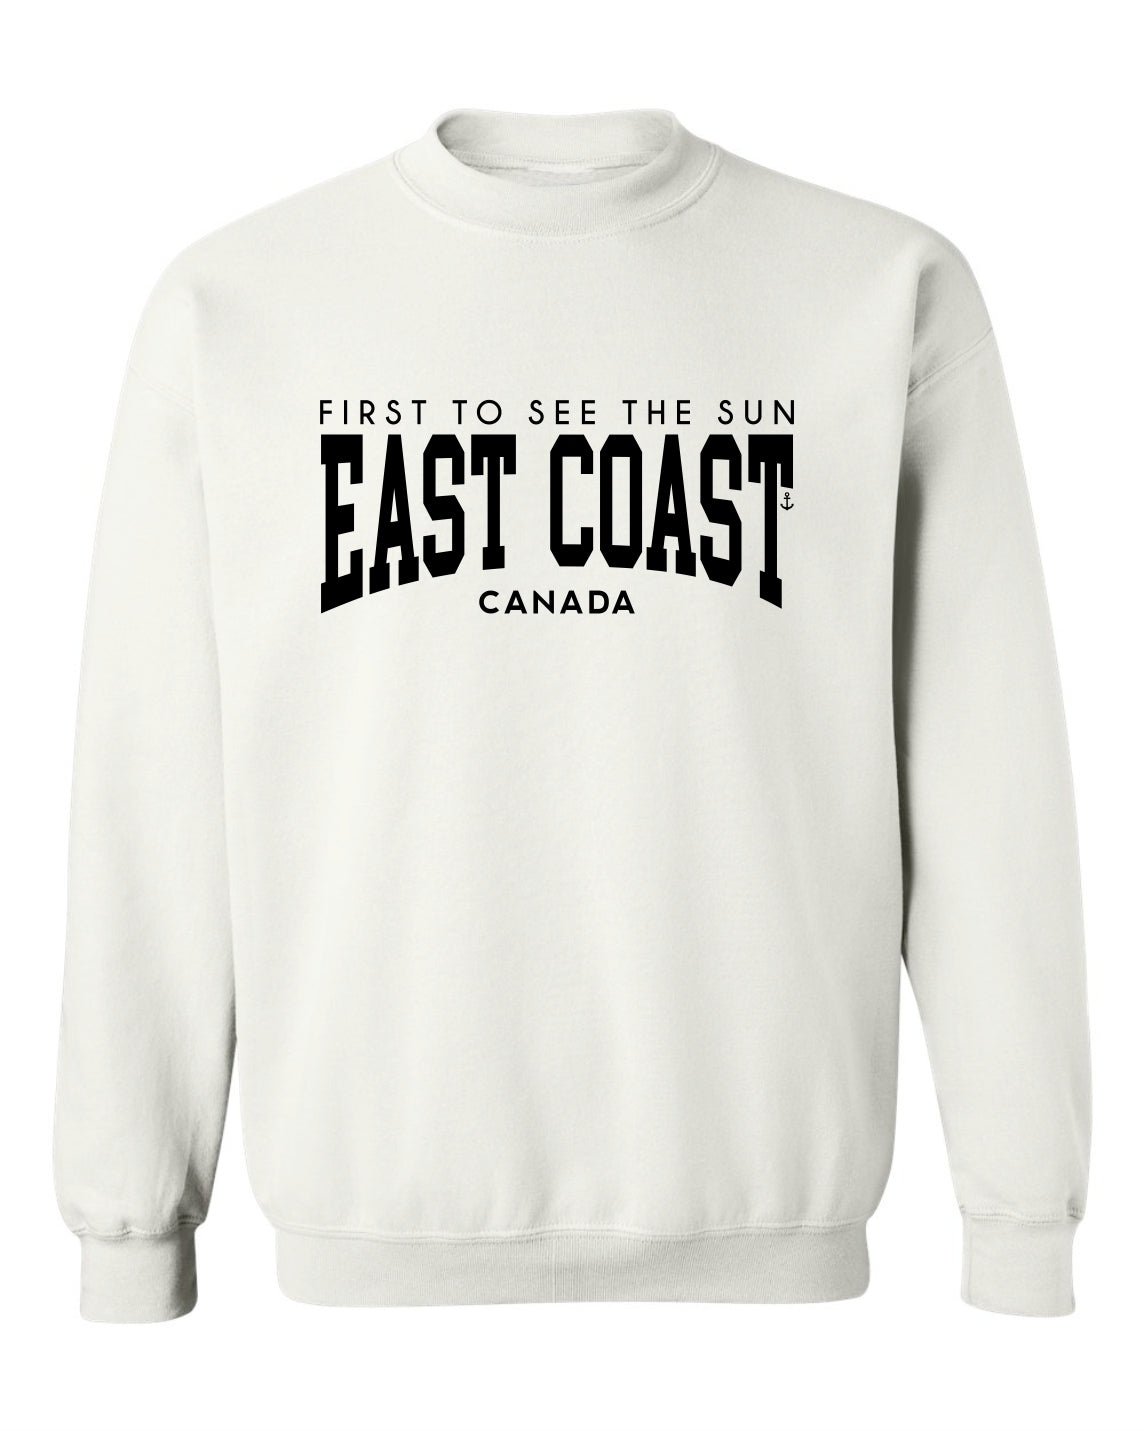 "East Coast - First To See The Sun" Unisex Crewneck Sweatshirt